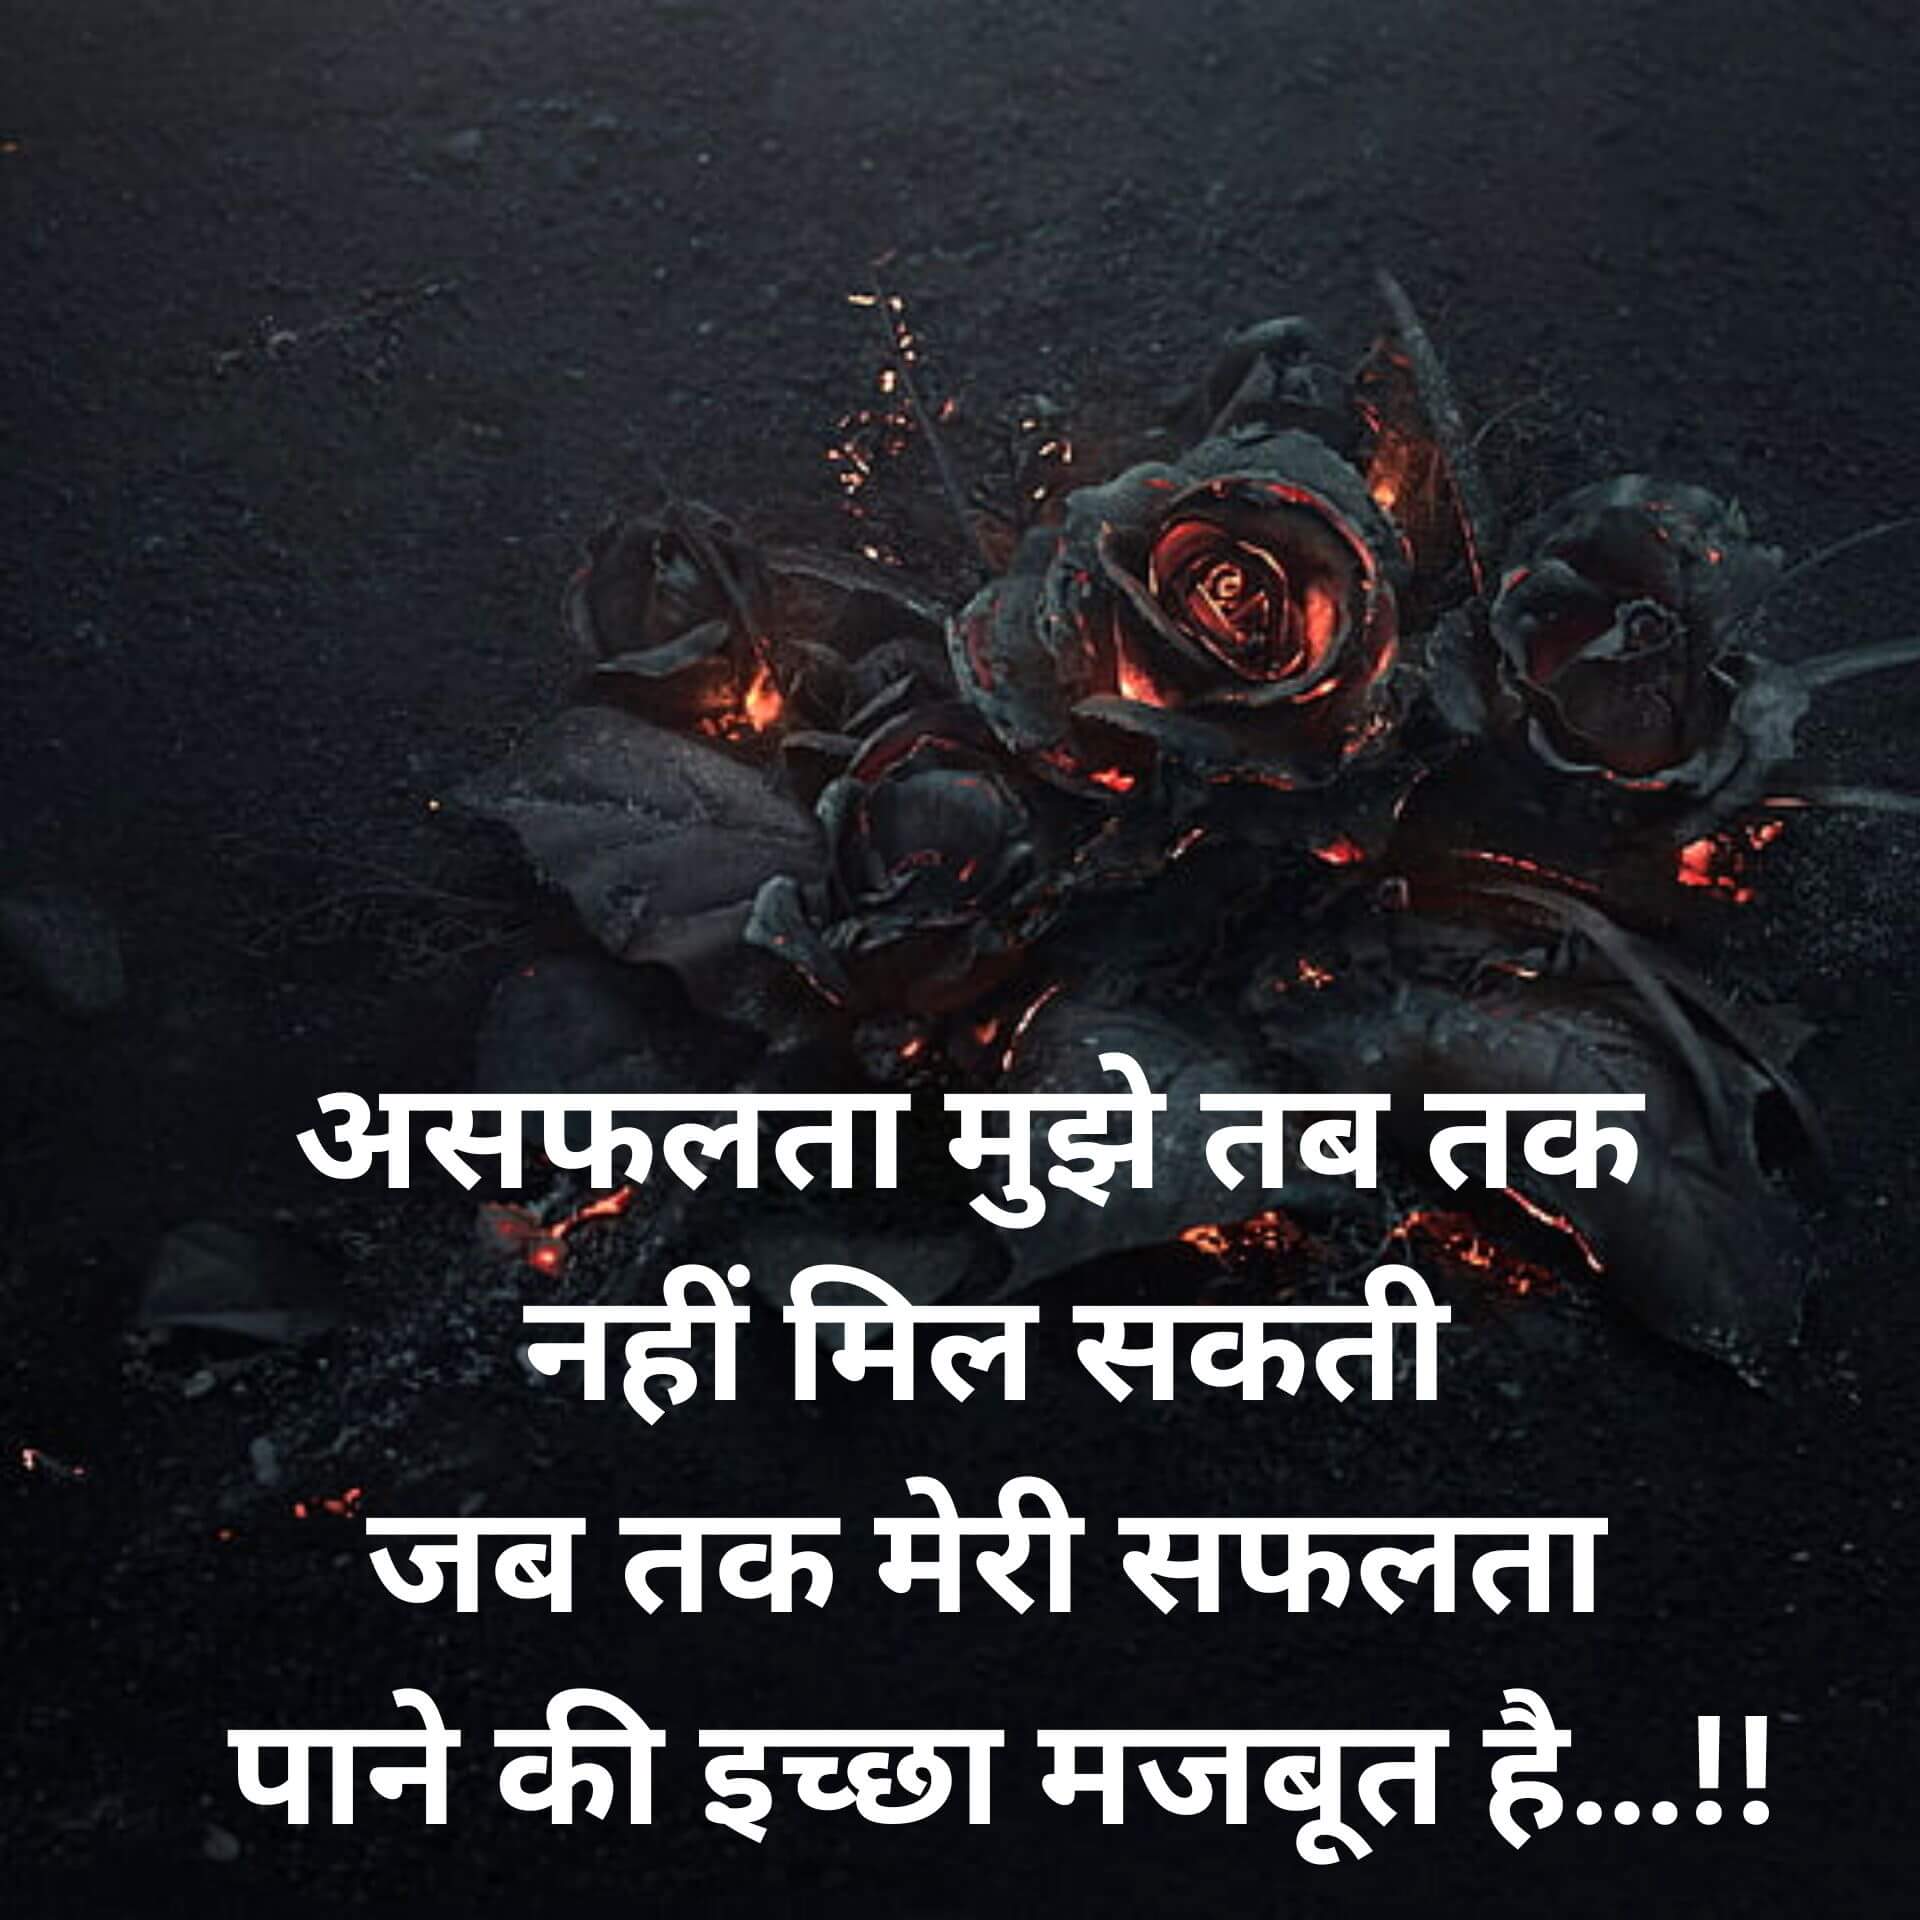 Hindi Motivational Quotes photo Download Free